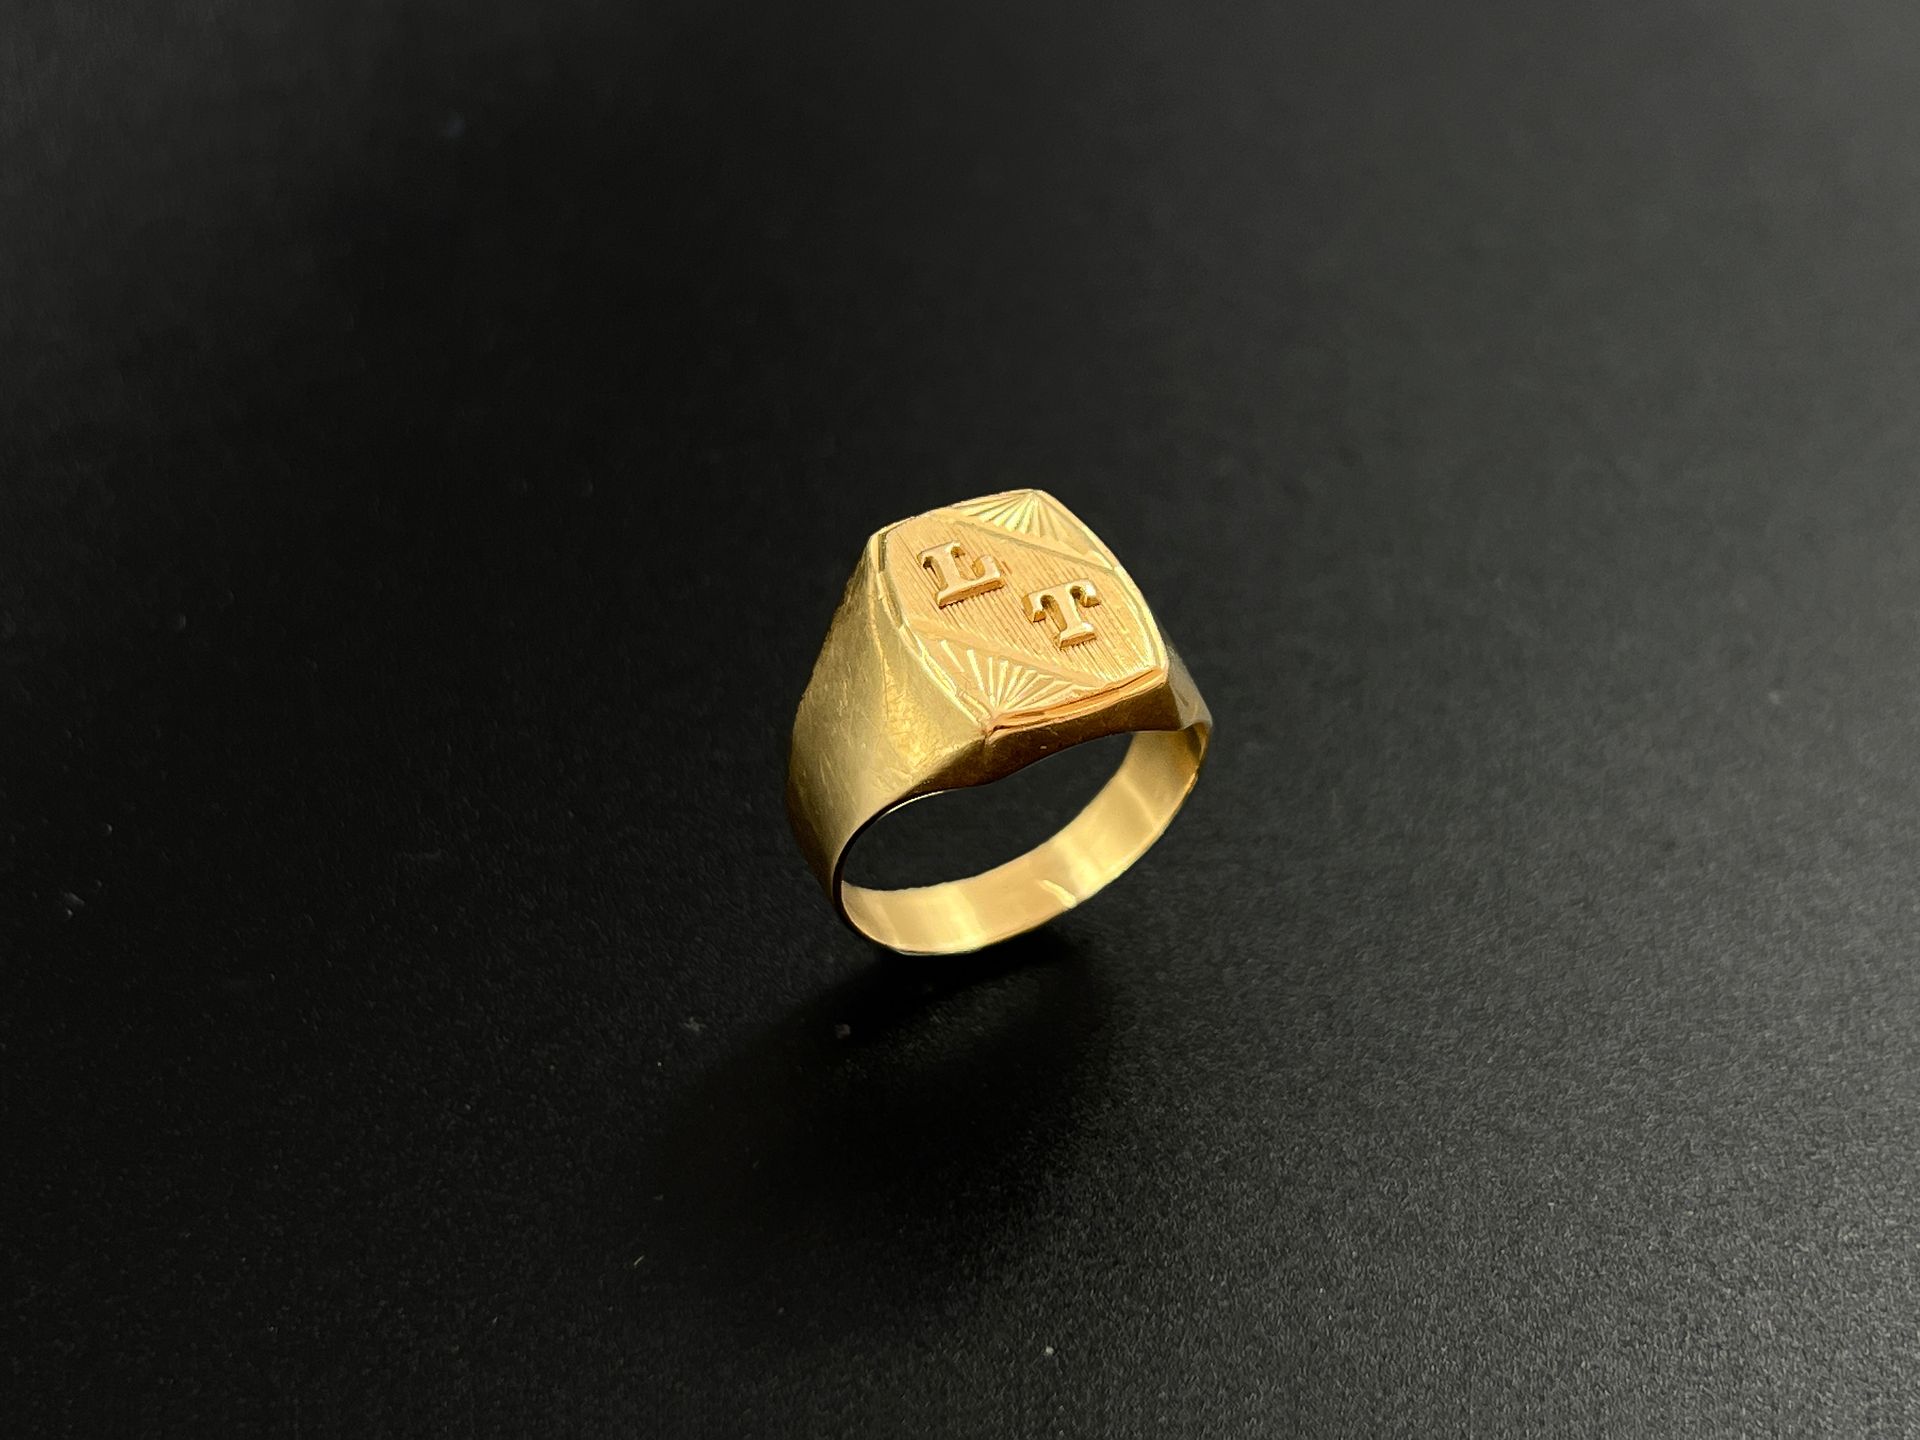 Null 标有 "L T "字样的黄金(750)戒指，背景是辐射状的图案。

重量：5.9克。